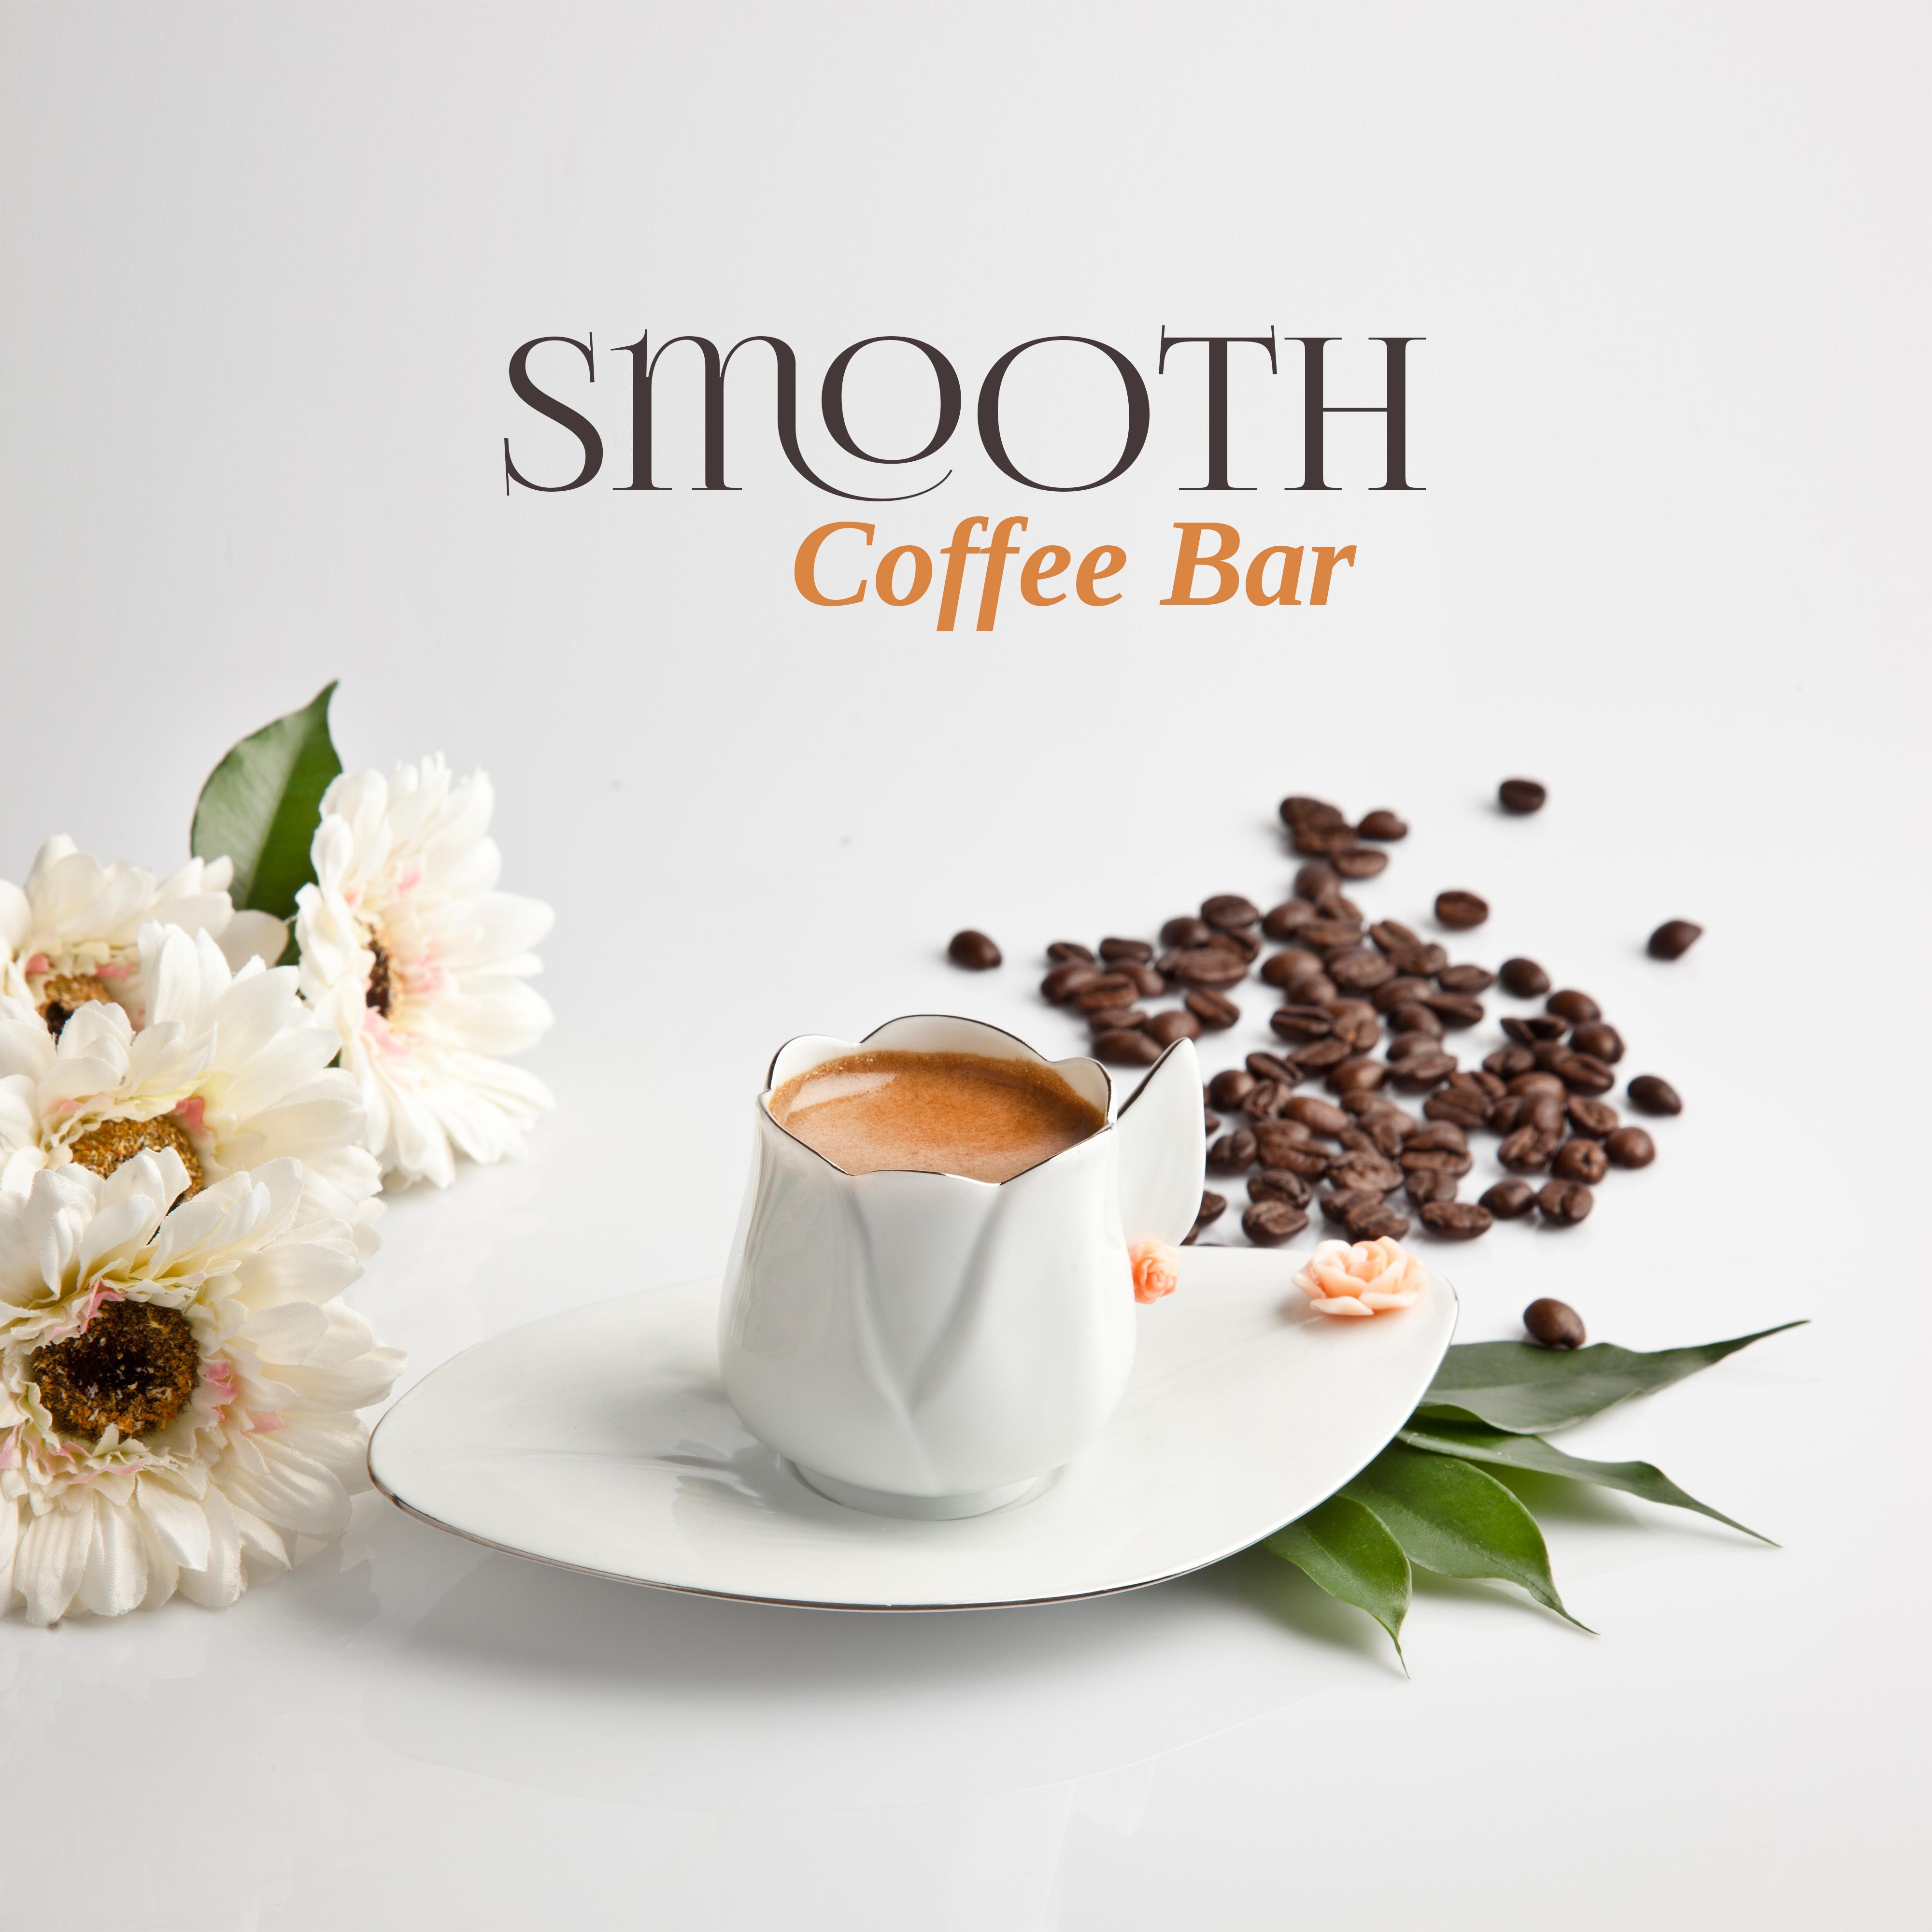 Smooth Coffee Bar